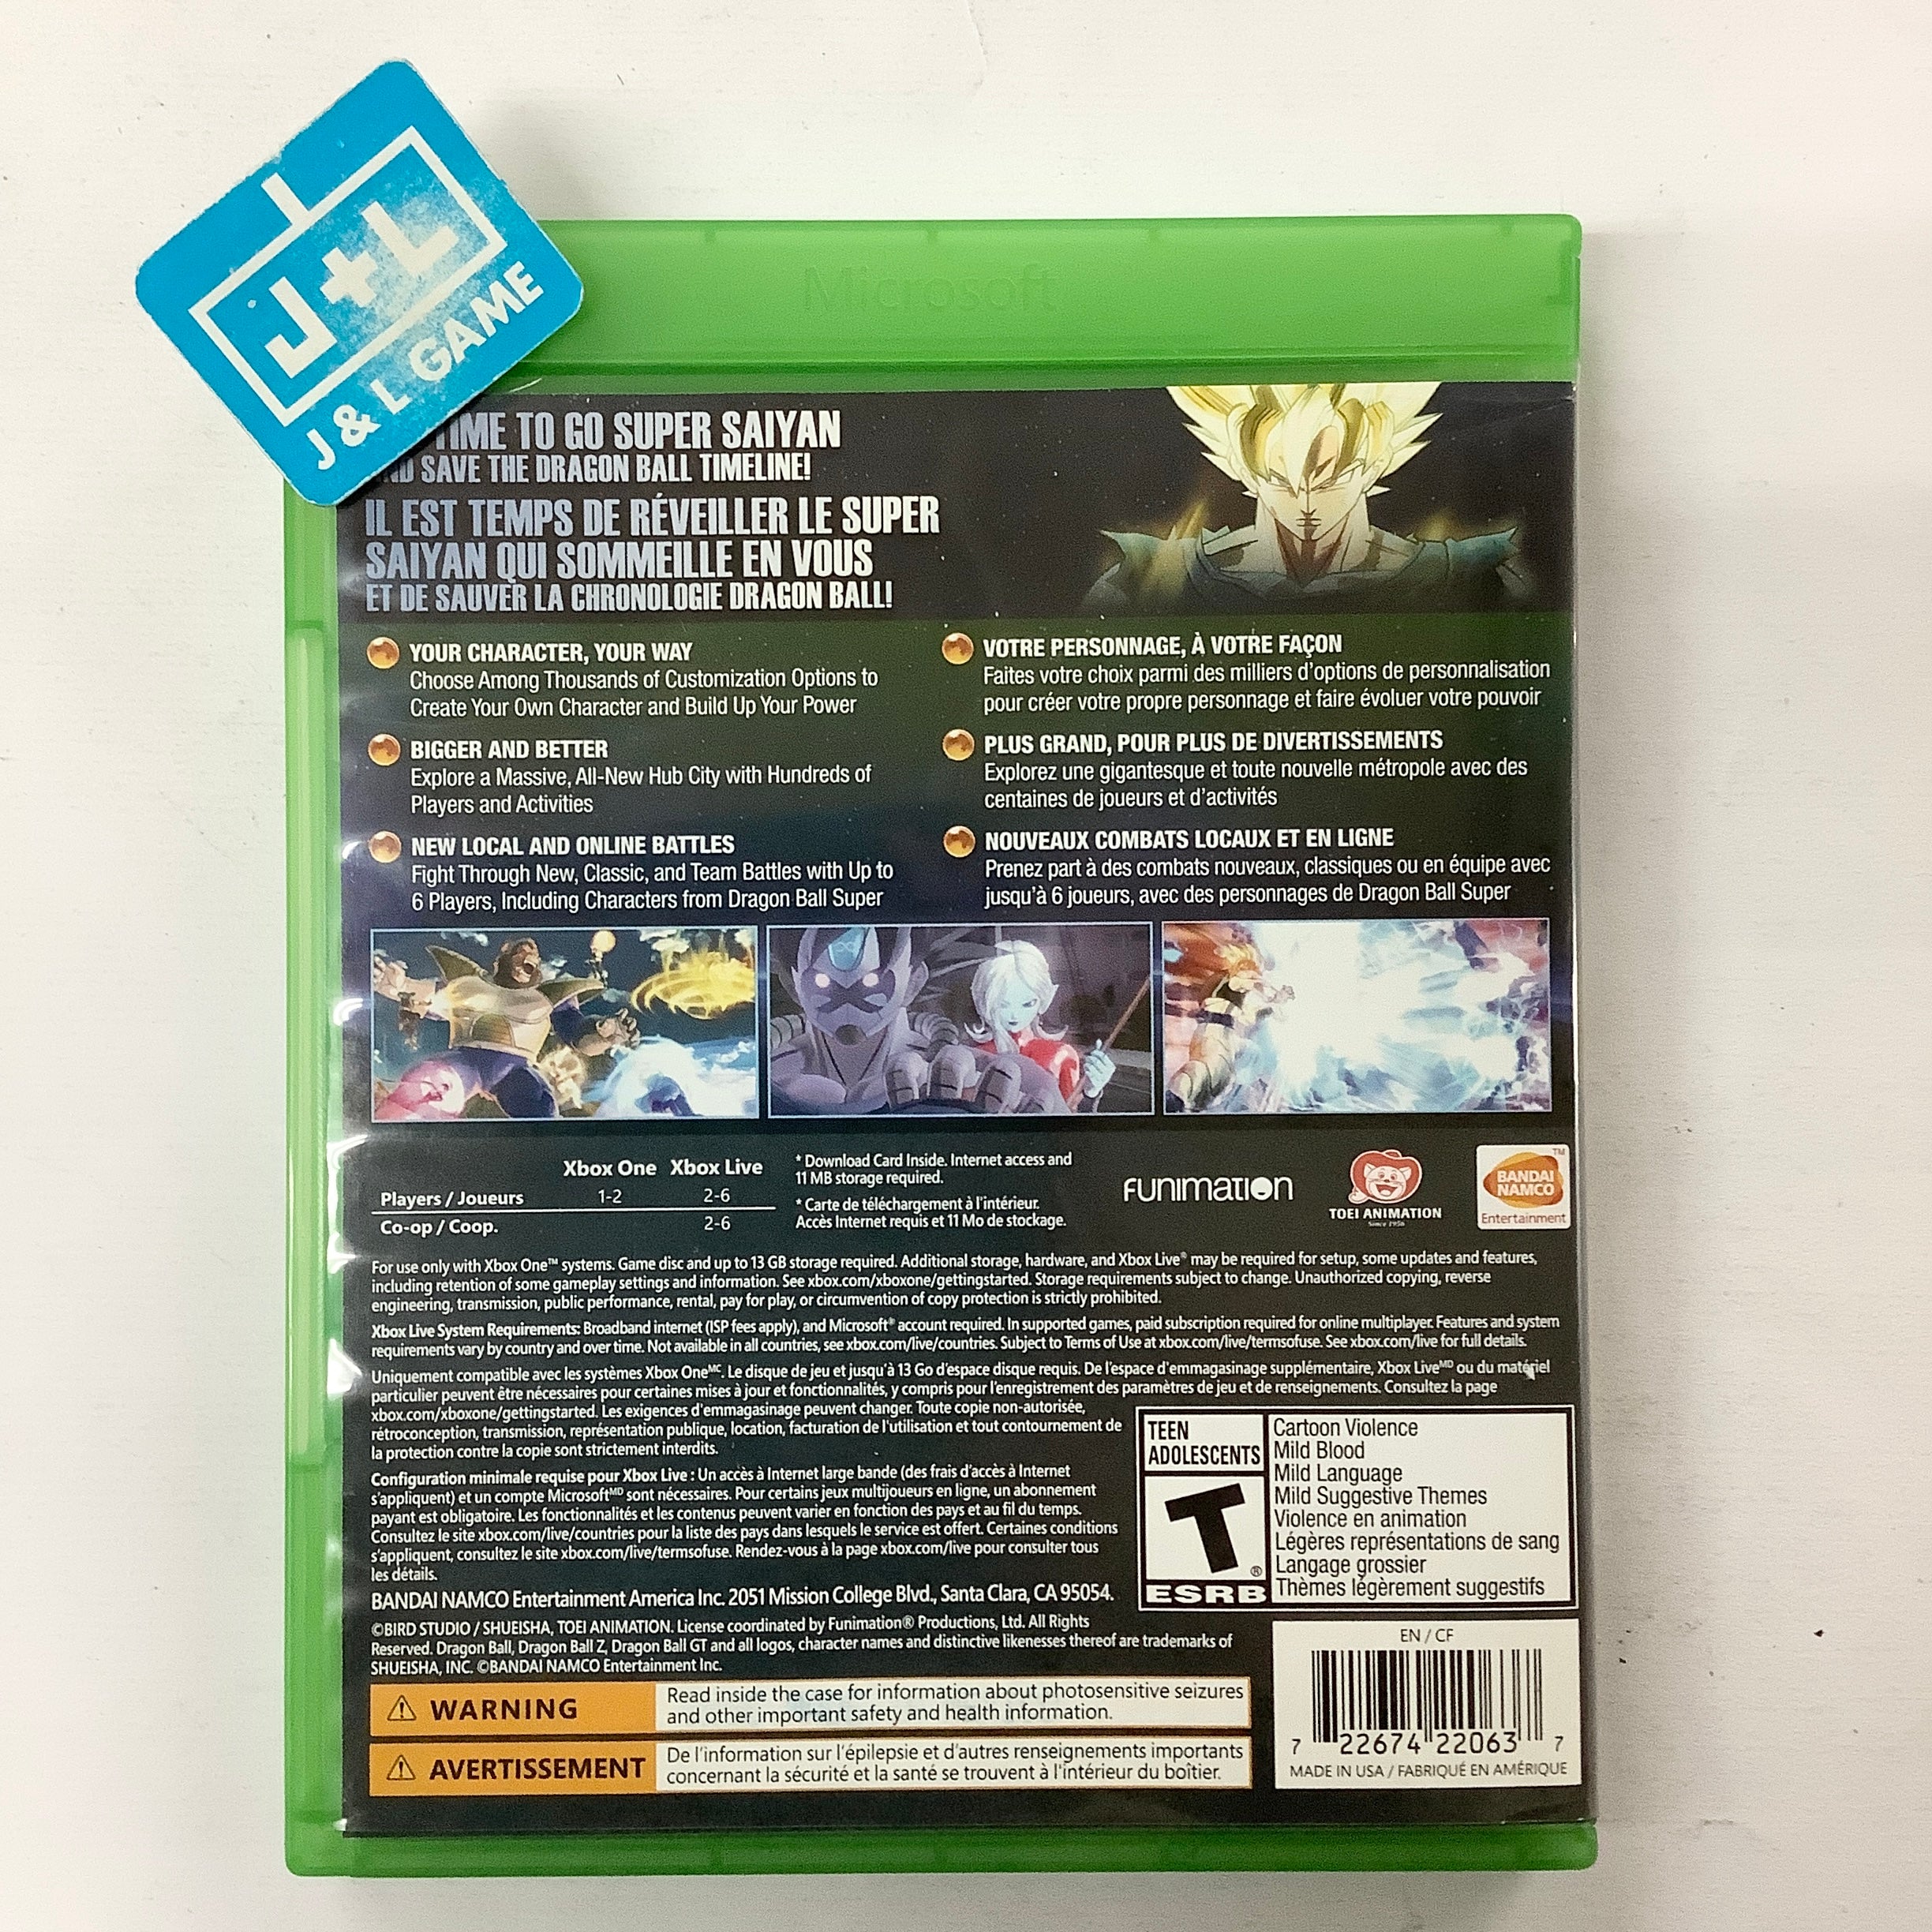 Dragon Ball: Xenoverse 2 (Day One Edition) - (XB1) Xbox One [Pre-Owned] Video Games BANDAI NAMCO Entertainment   